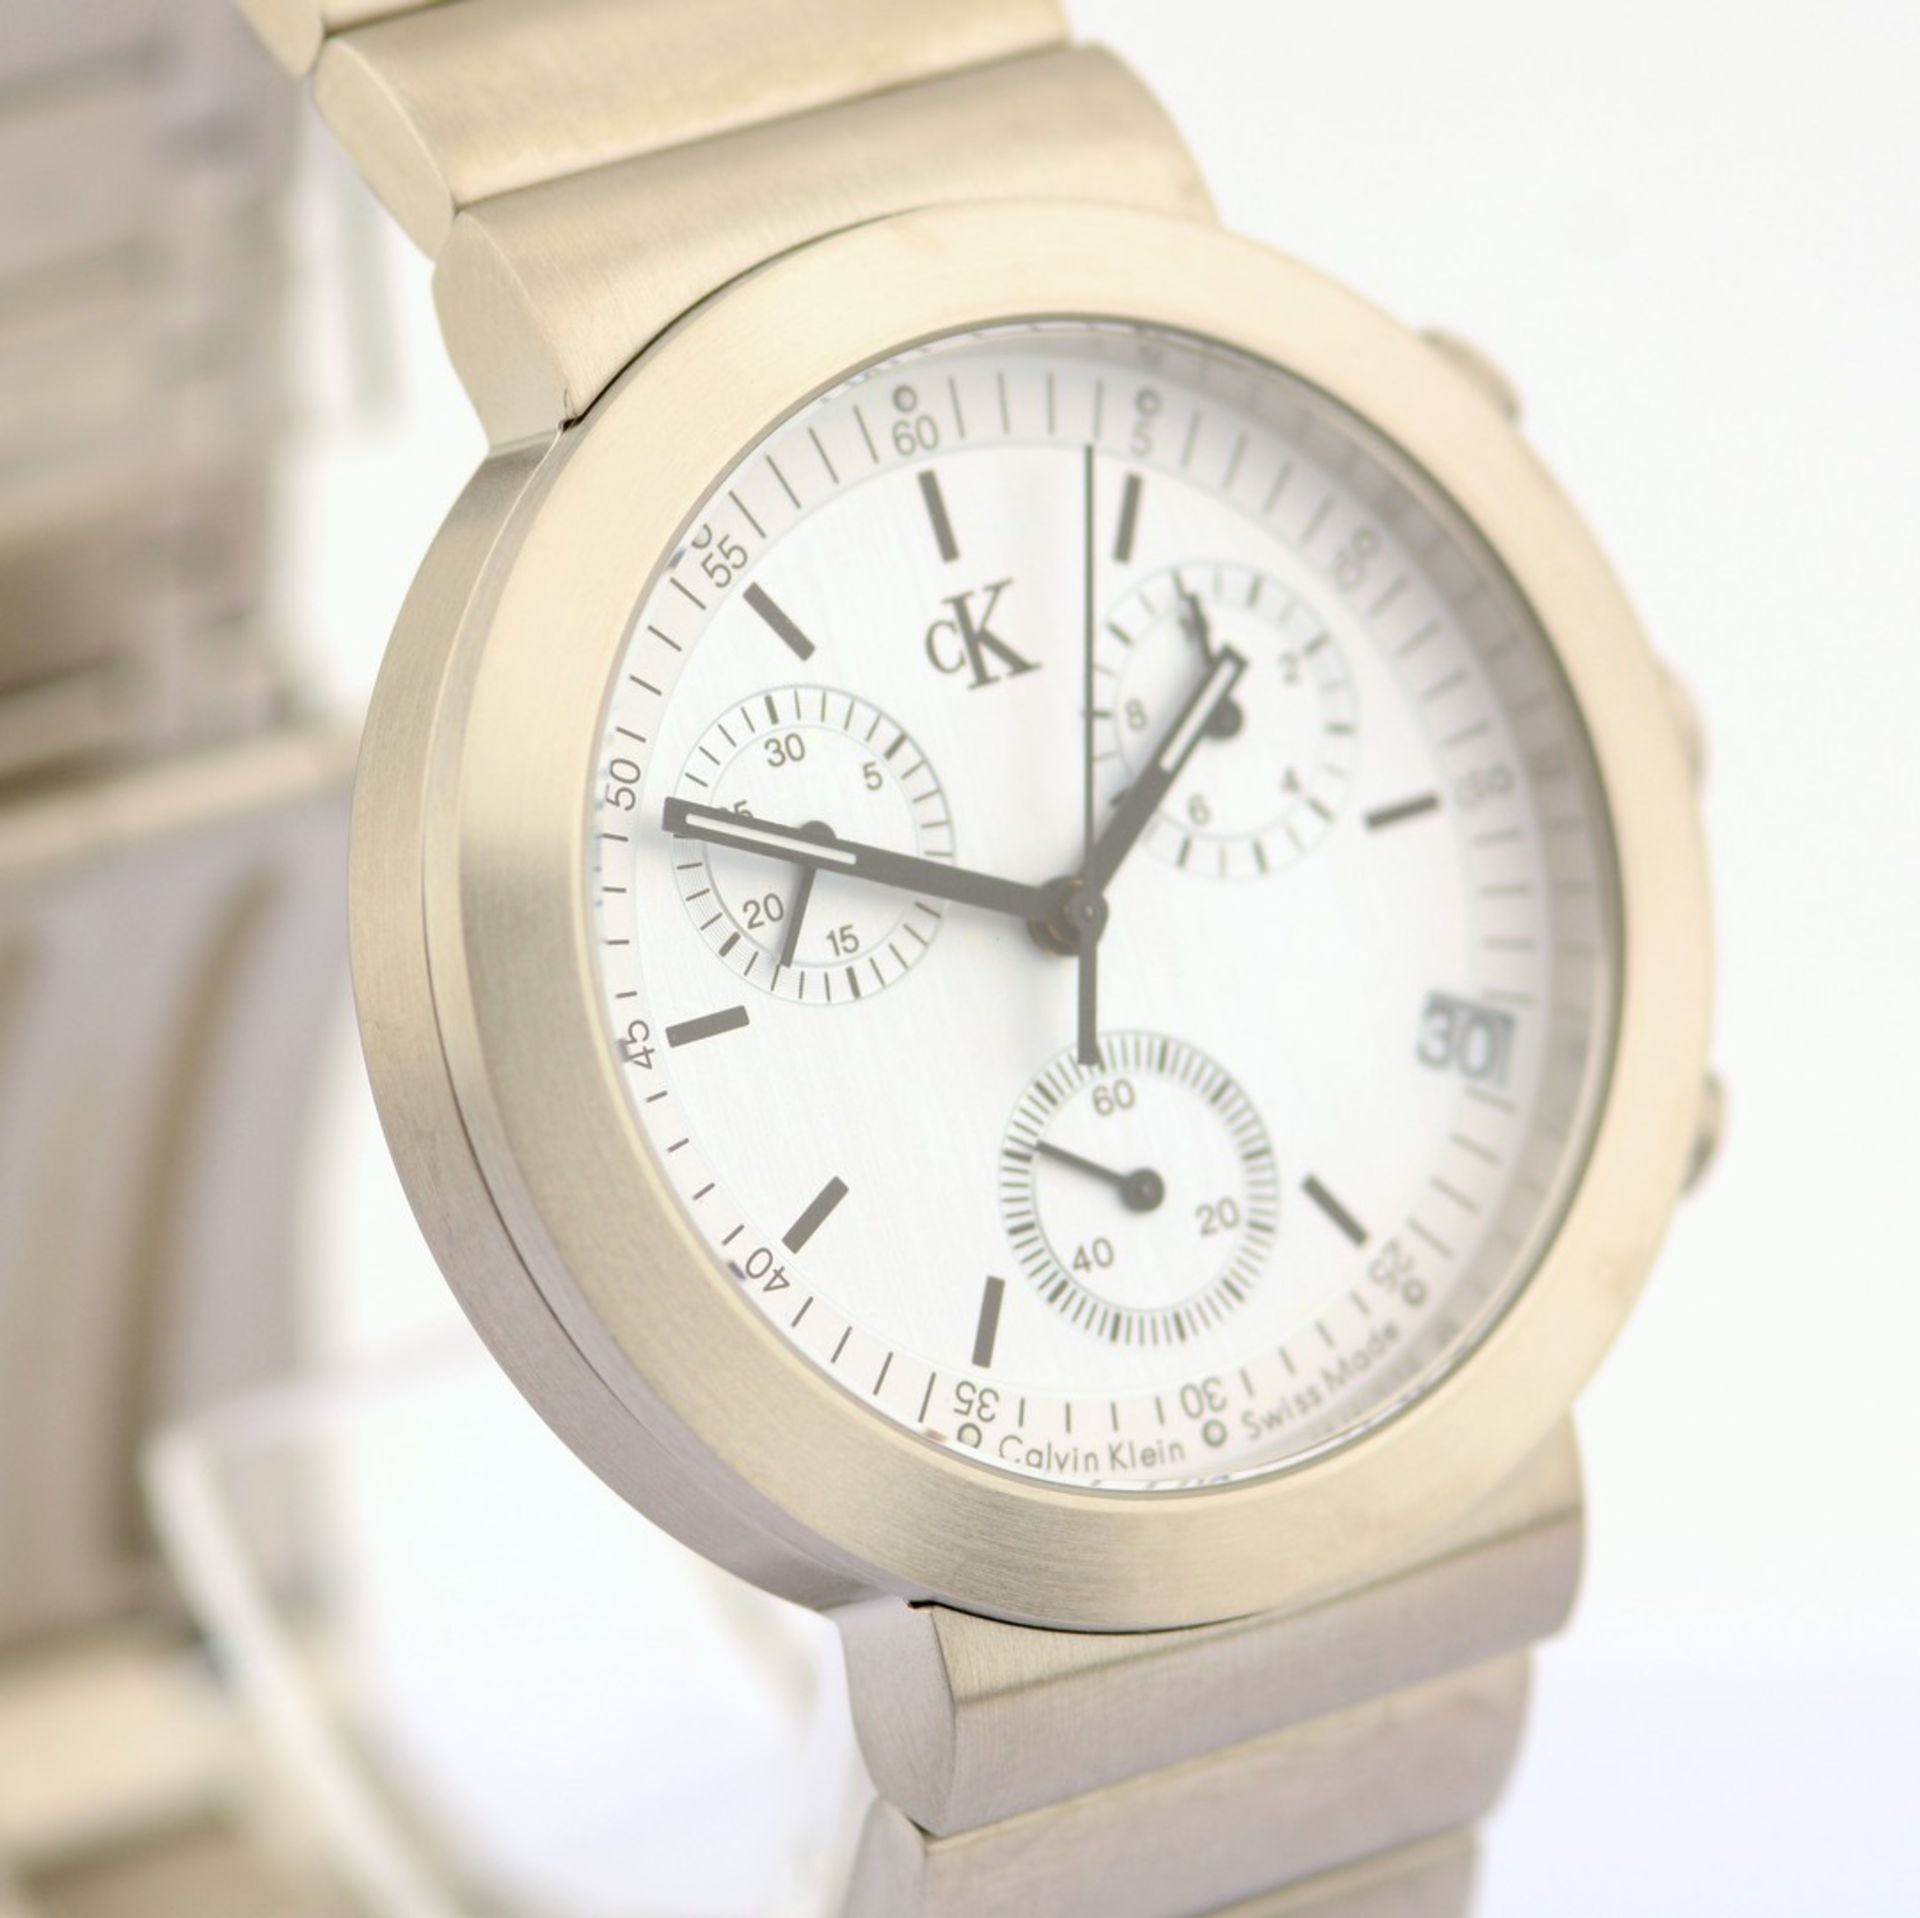 Calvin Klein / Chronograph - Gentlemen's Steel Wristwatch - Image 4 of 8